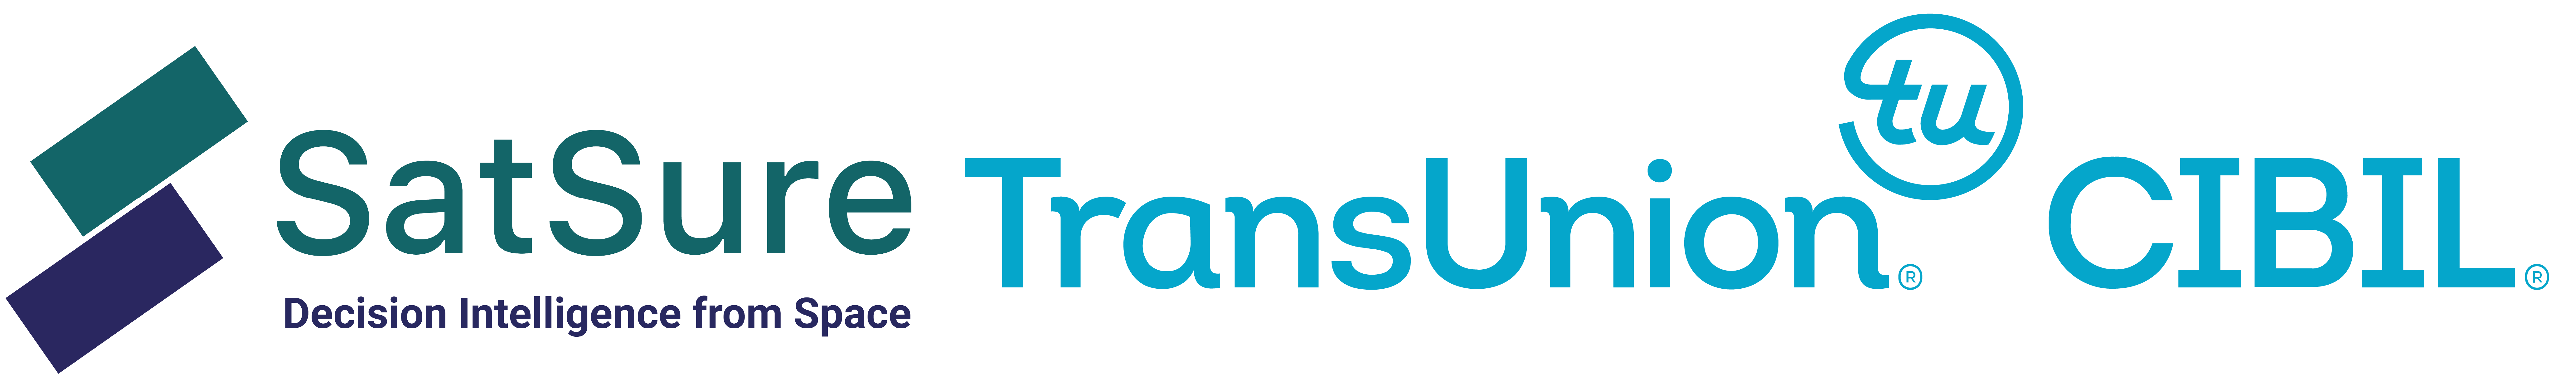 satsure logo